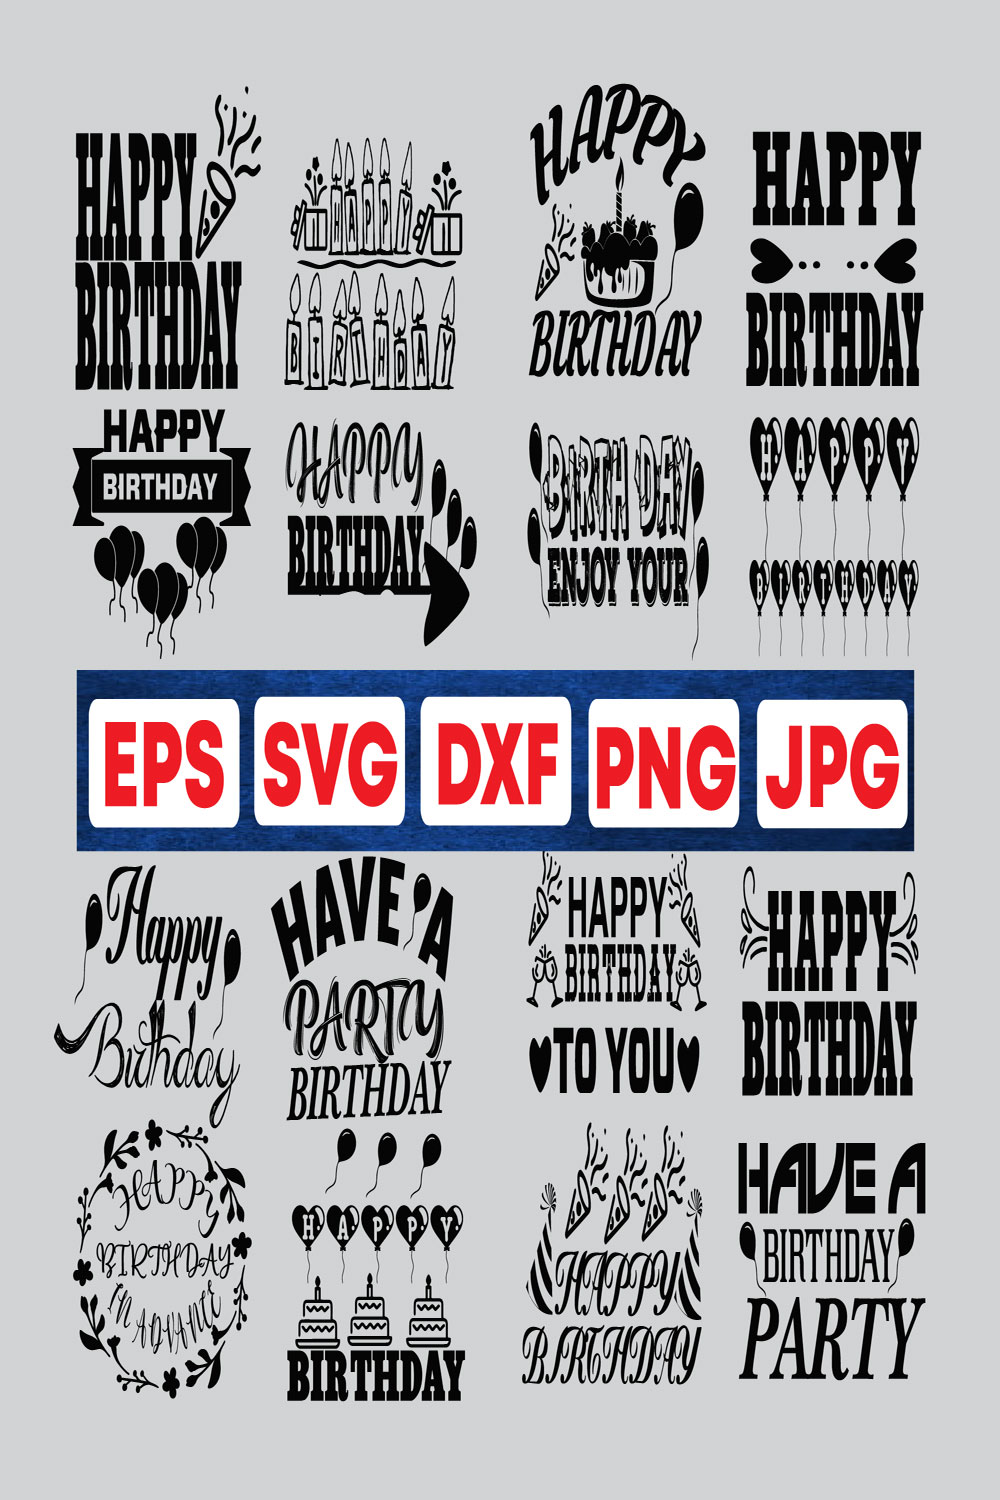 Happy-Birthday-SVG-design pinterest preview image.